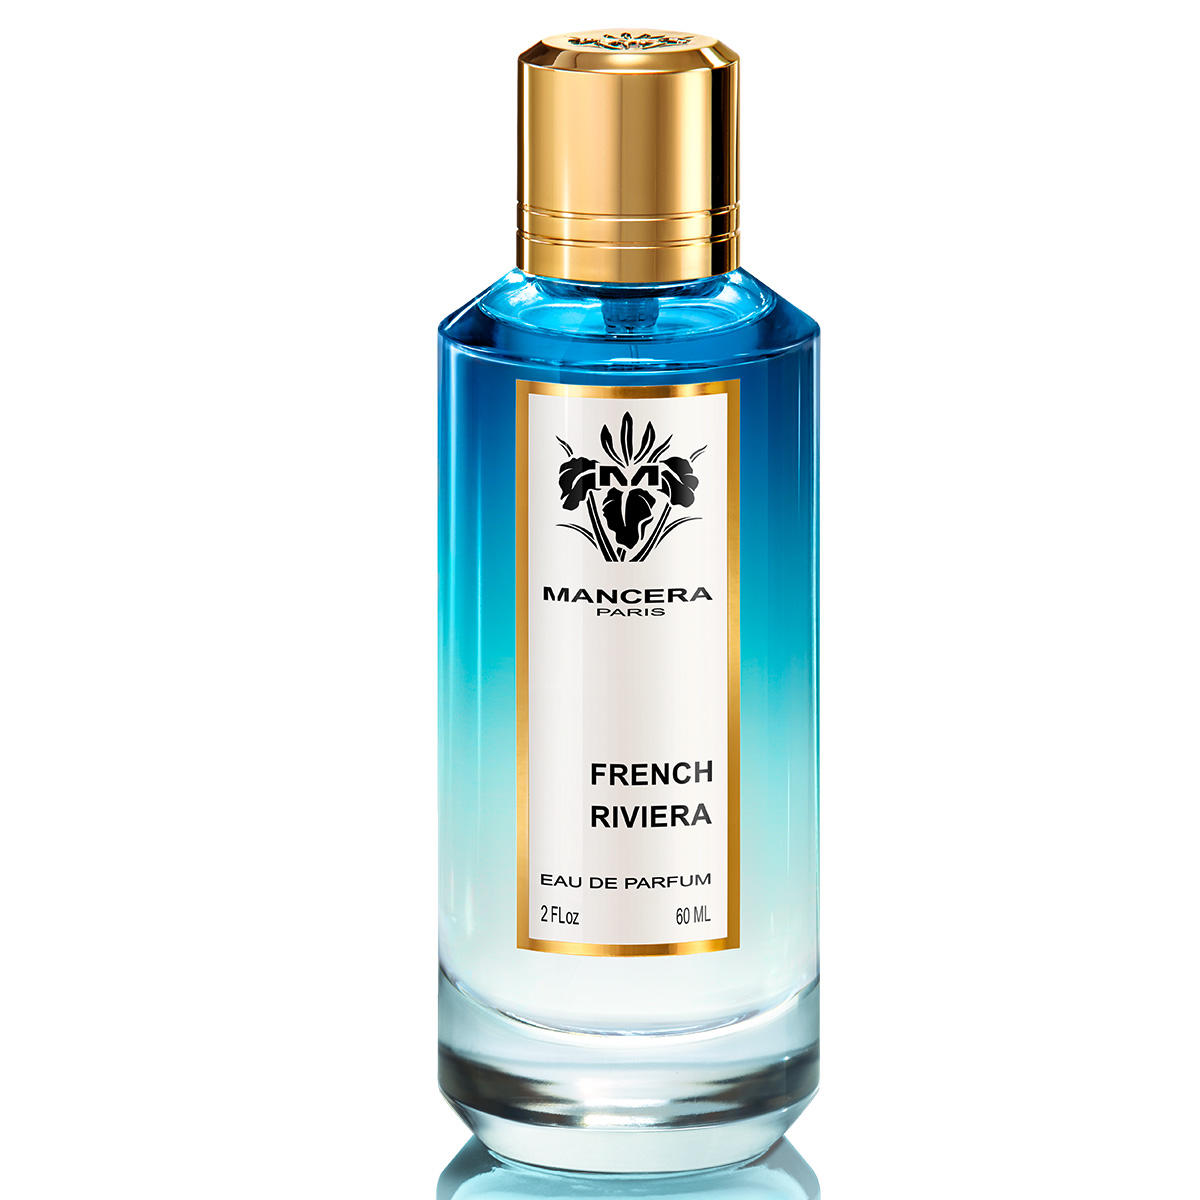 MANCERA FRENCH RIVIERA Eau de Parfum 60 ml